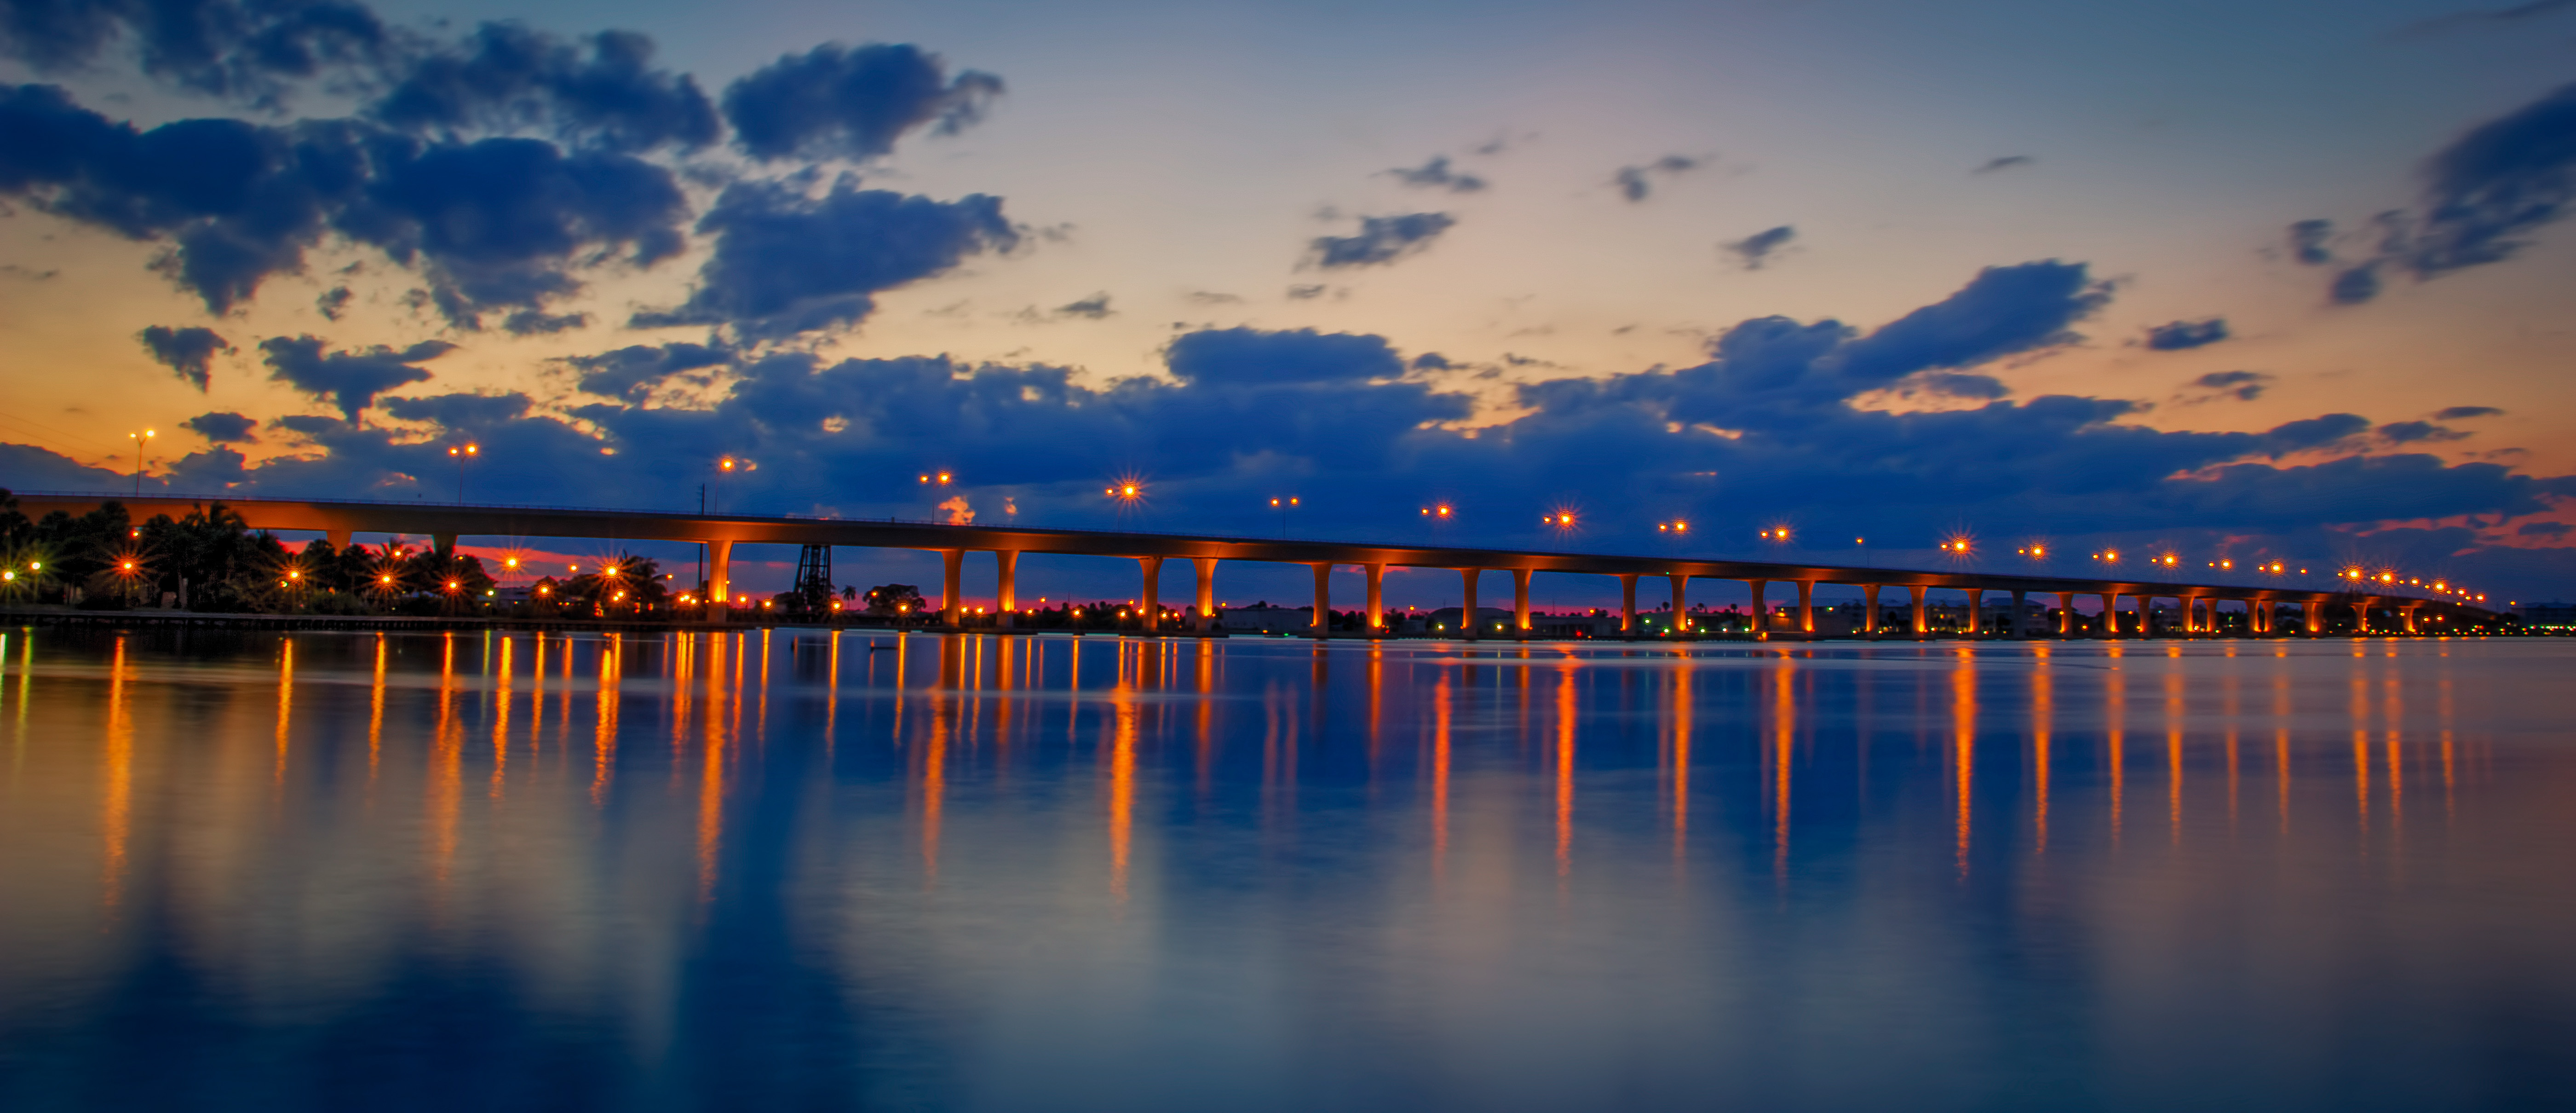 Stuart's Roosevelt Bridge Casts Reflections on the Scenic Saint Lucie River at Seminole Bluff